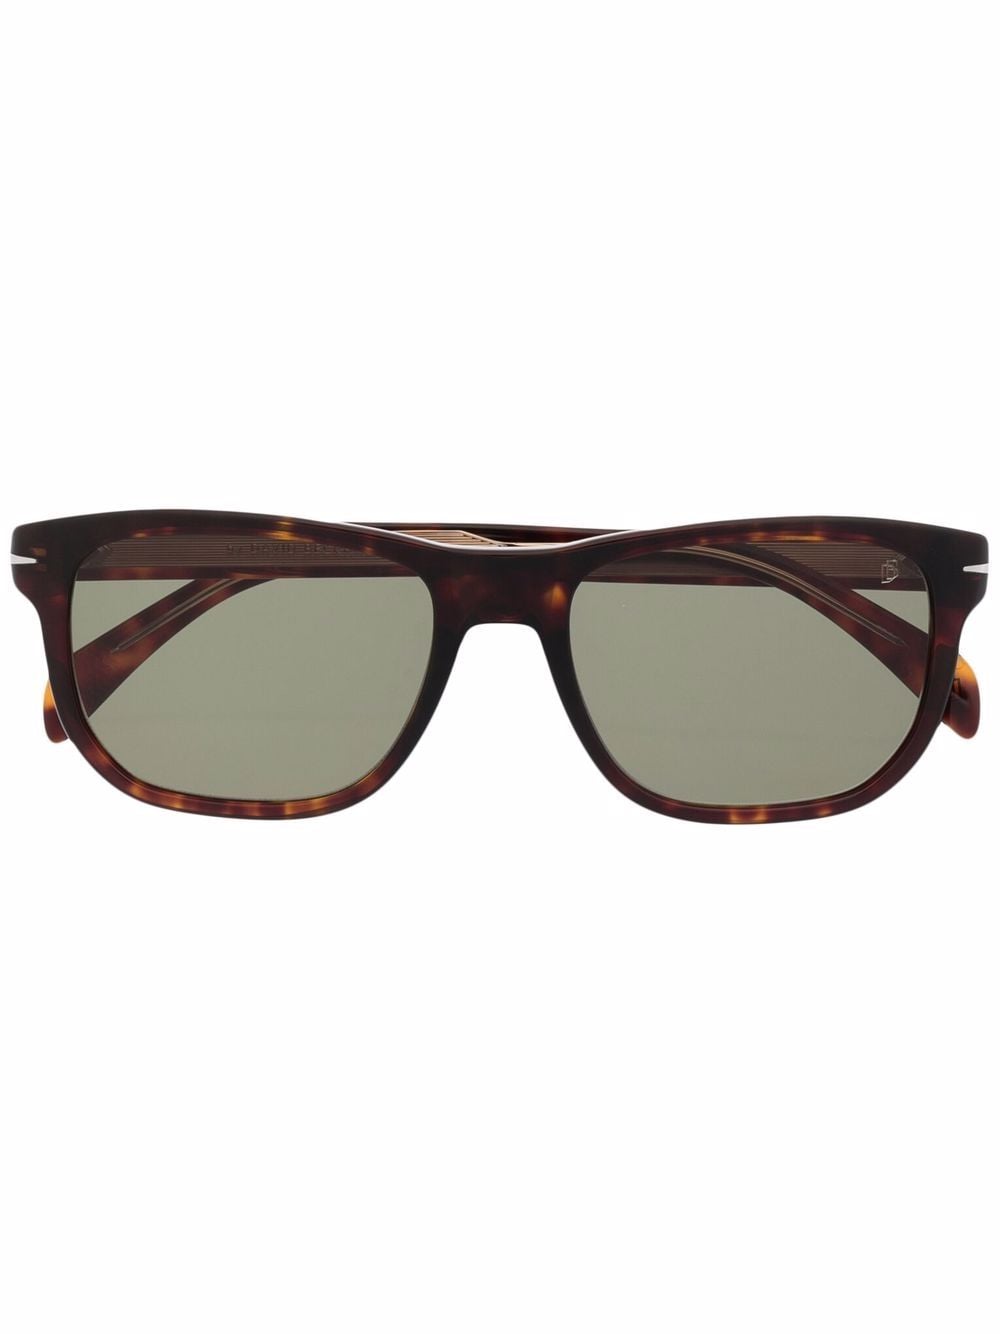 Eyewear by David Beckham tortoiseshell square-frame sunglasses - Brown von Eyewear by David Beckham